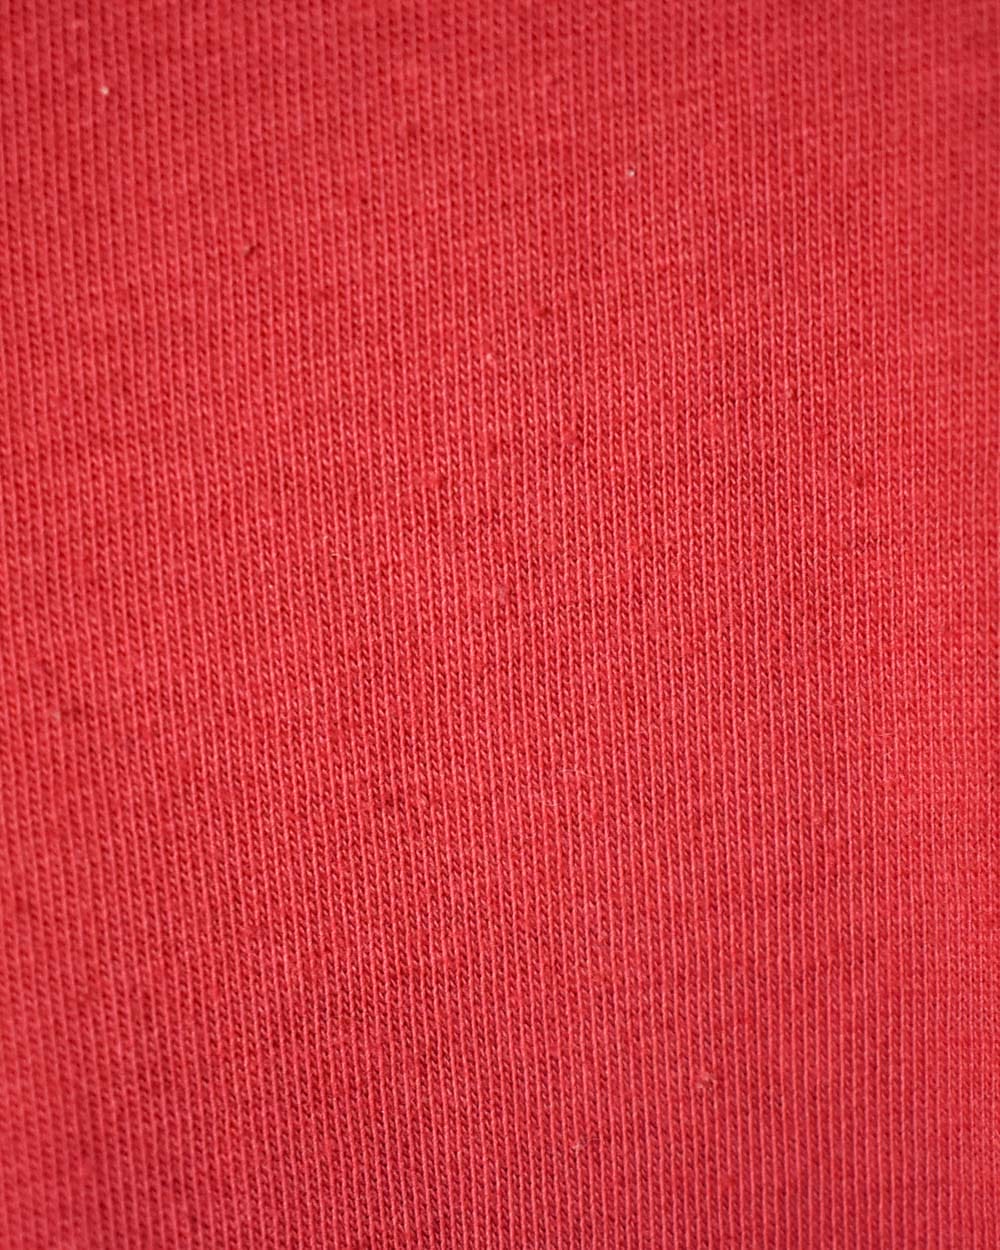 Red Adidas T-Shirt - Large